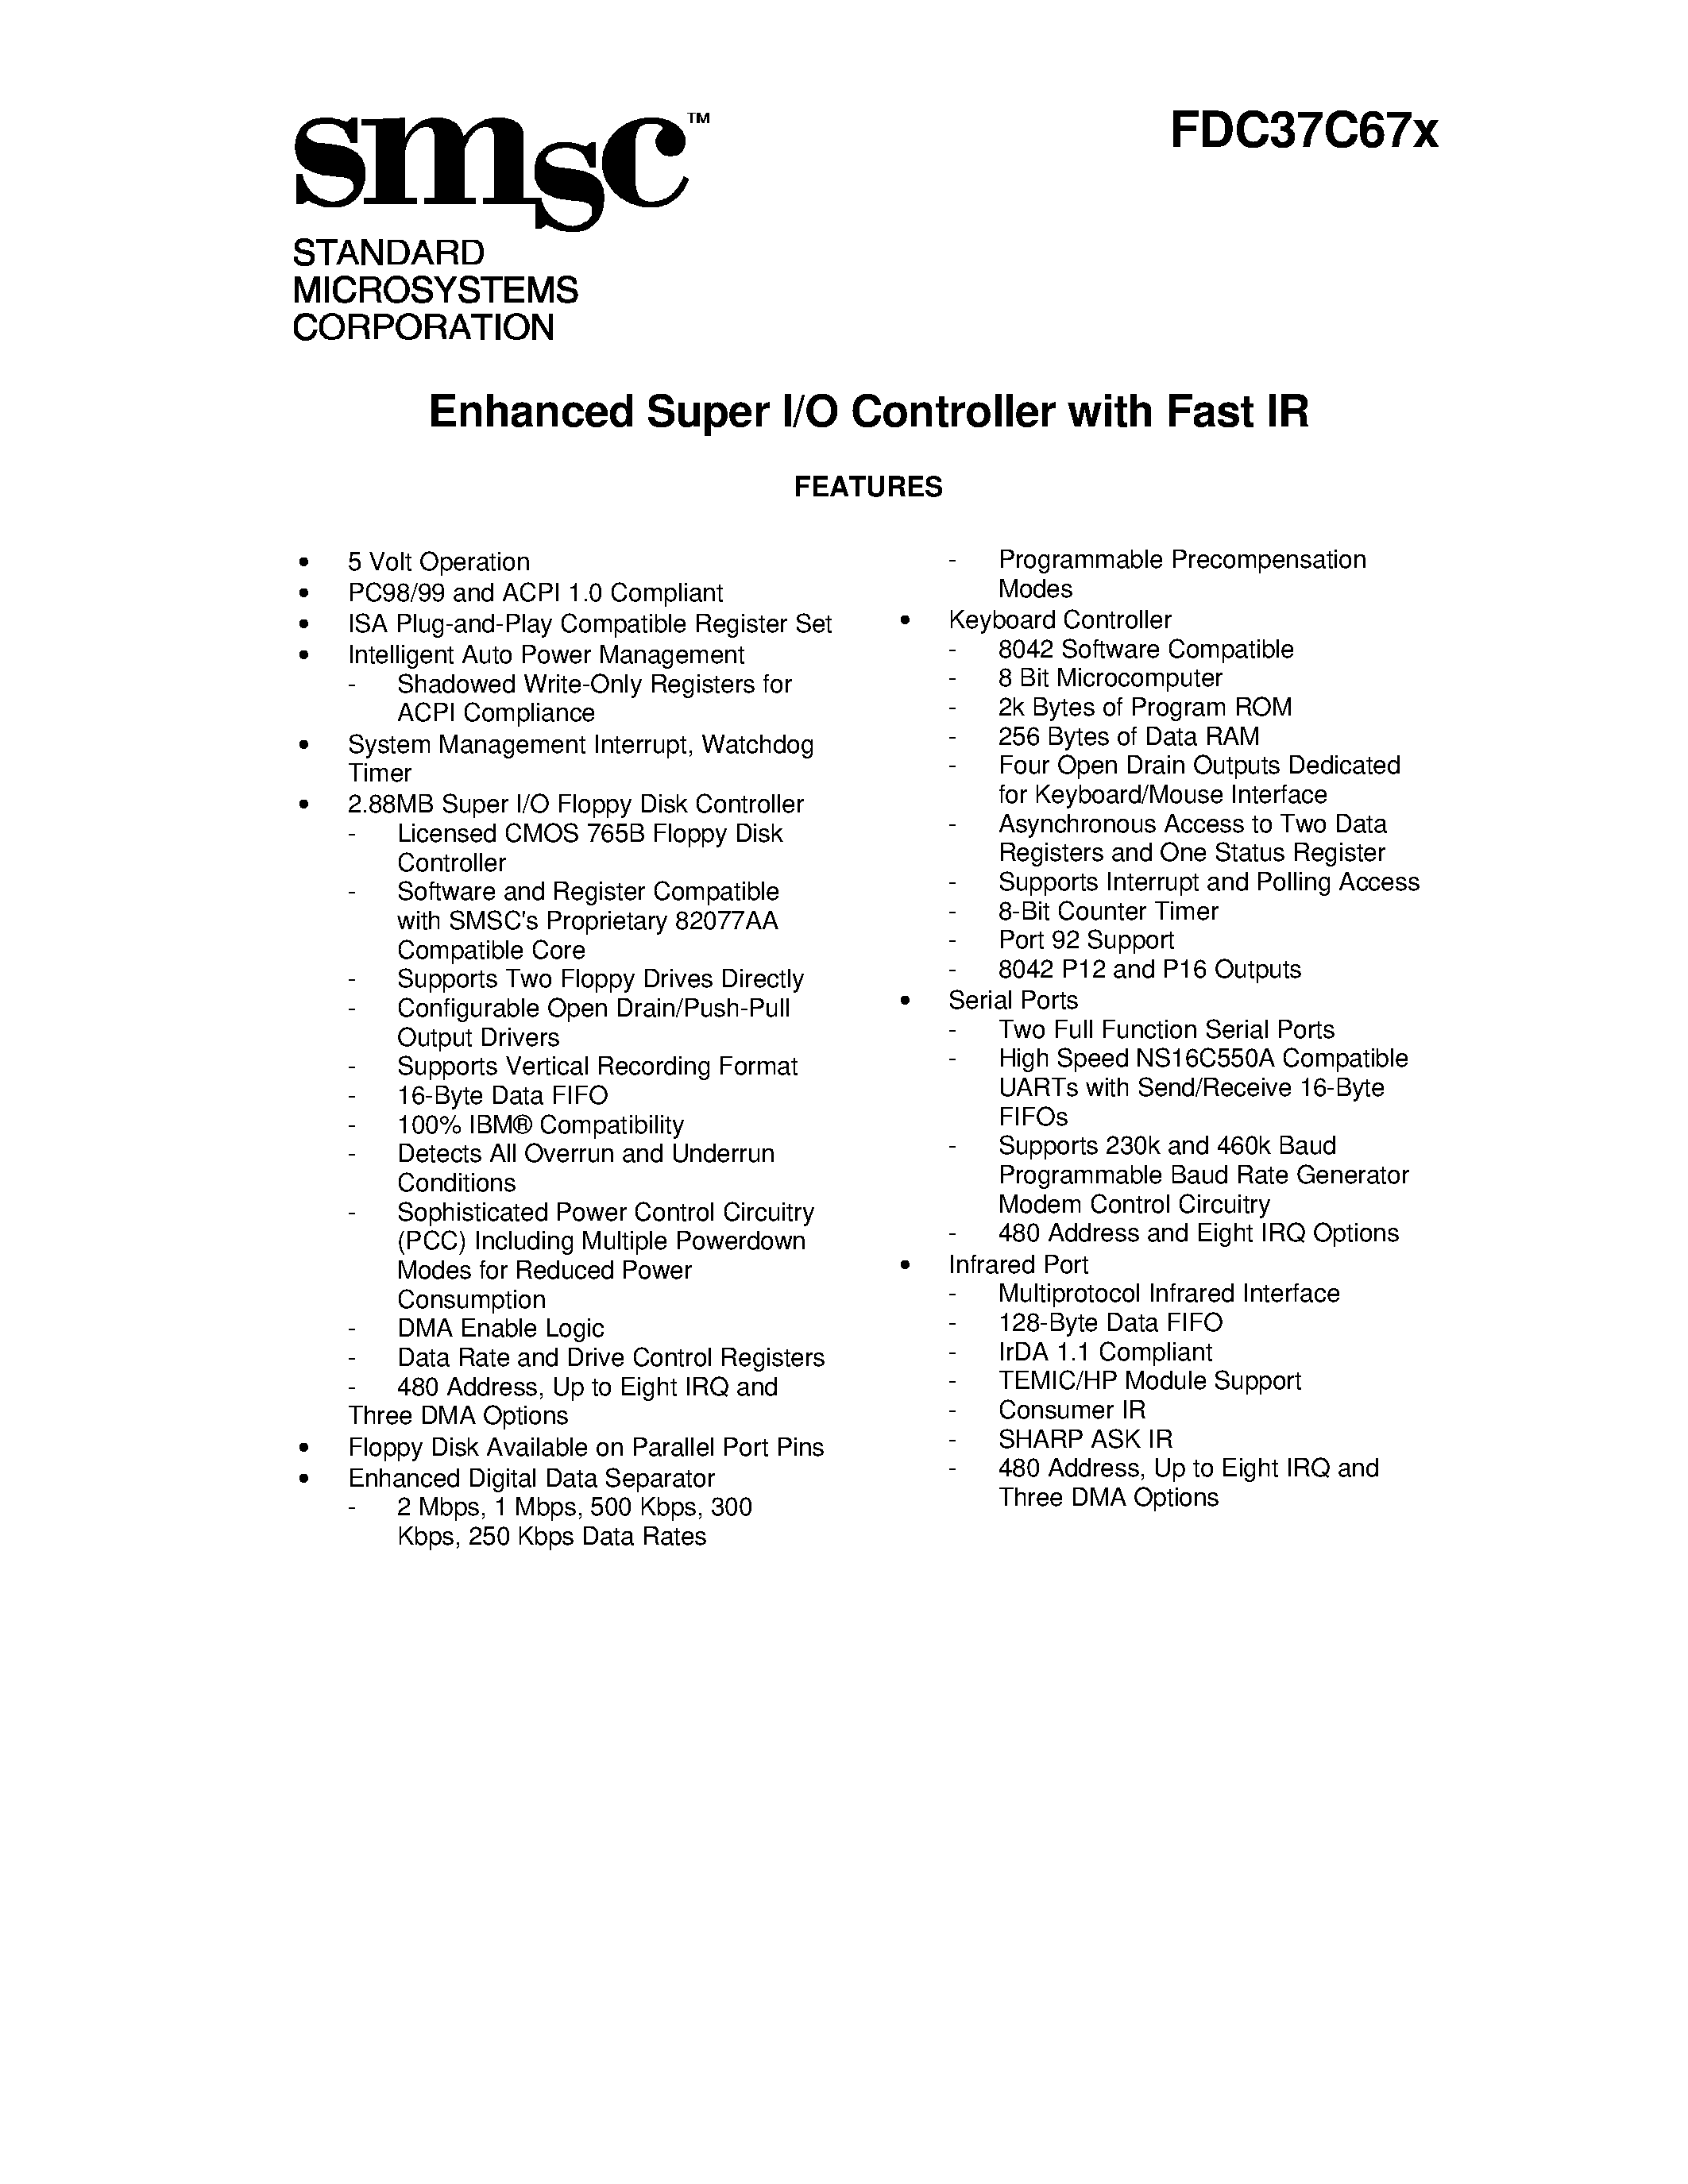 Datasheet 37C67X - ENHANCED SUPER I/O CONTROLLER WITH FAST IR page 1